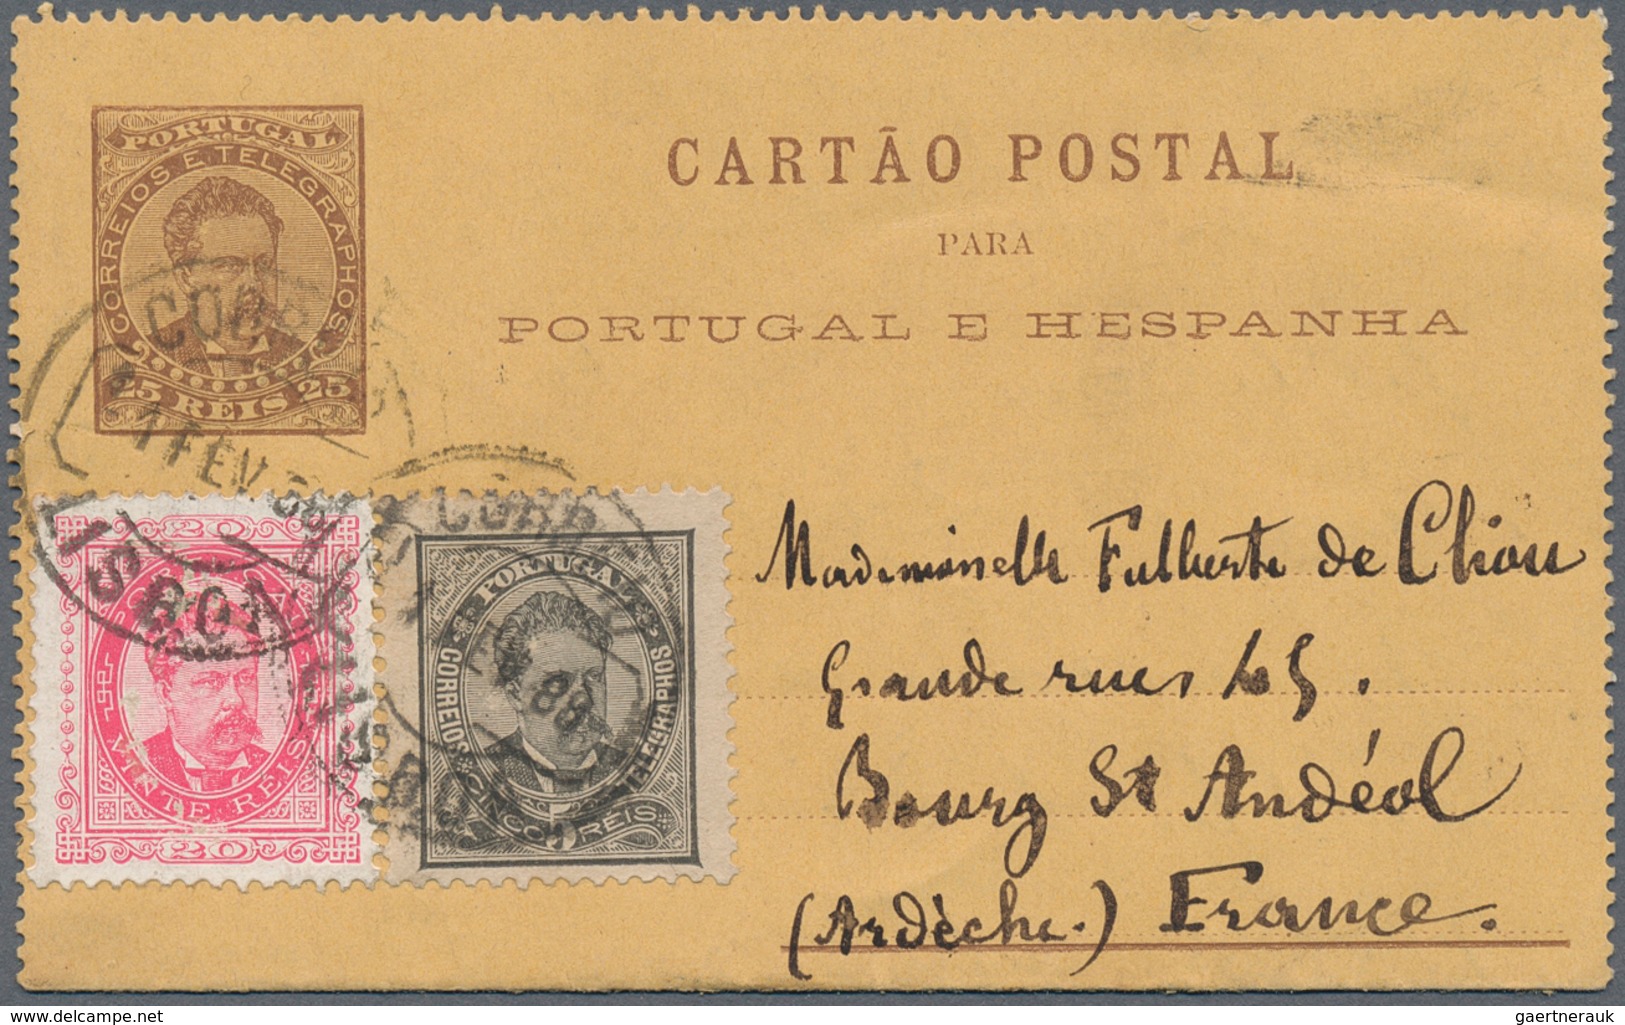 27739 Portugal: 1820/1946: 21 envelopes and postal stationeries including pre-philatelic, registered and u